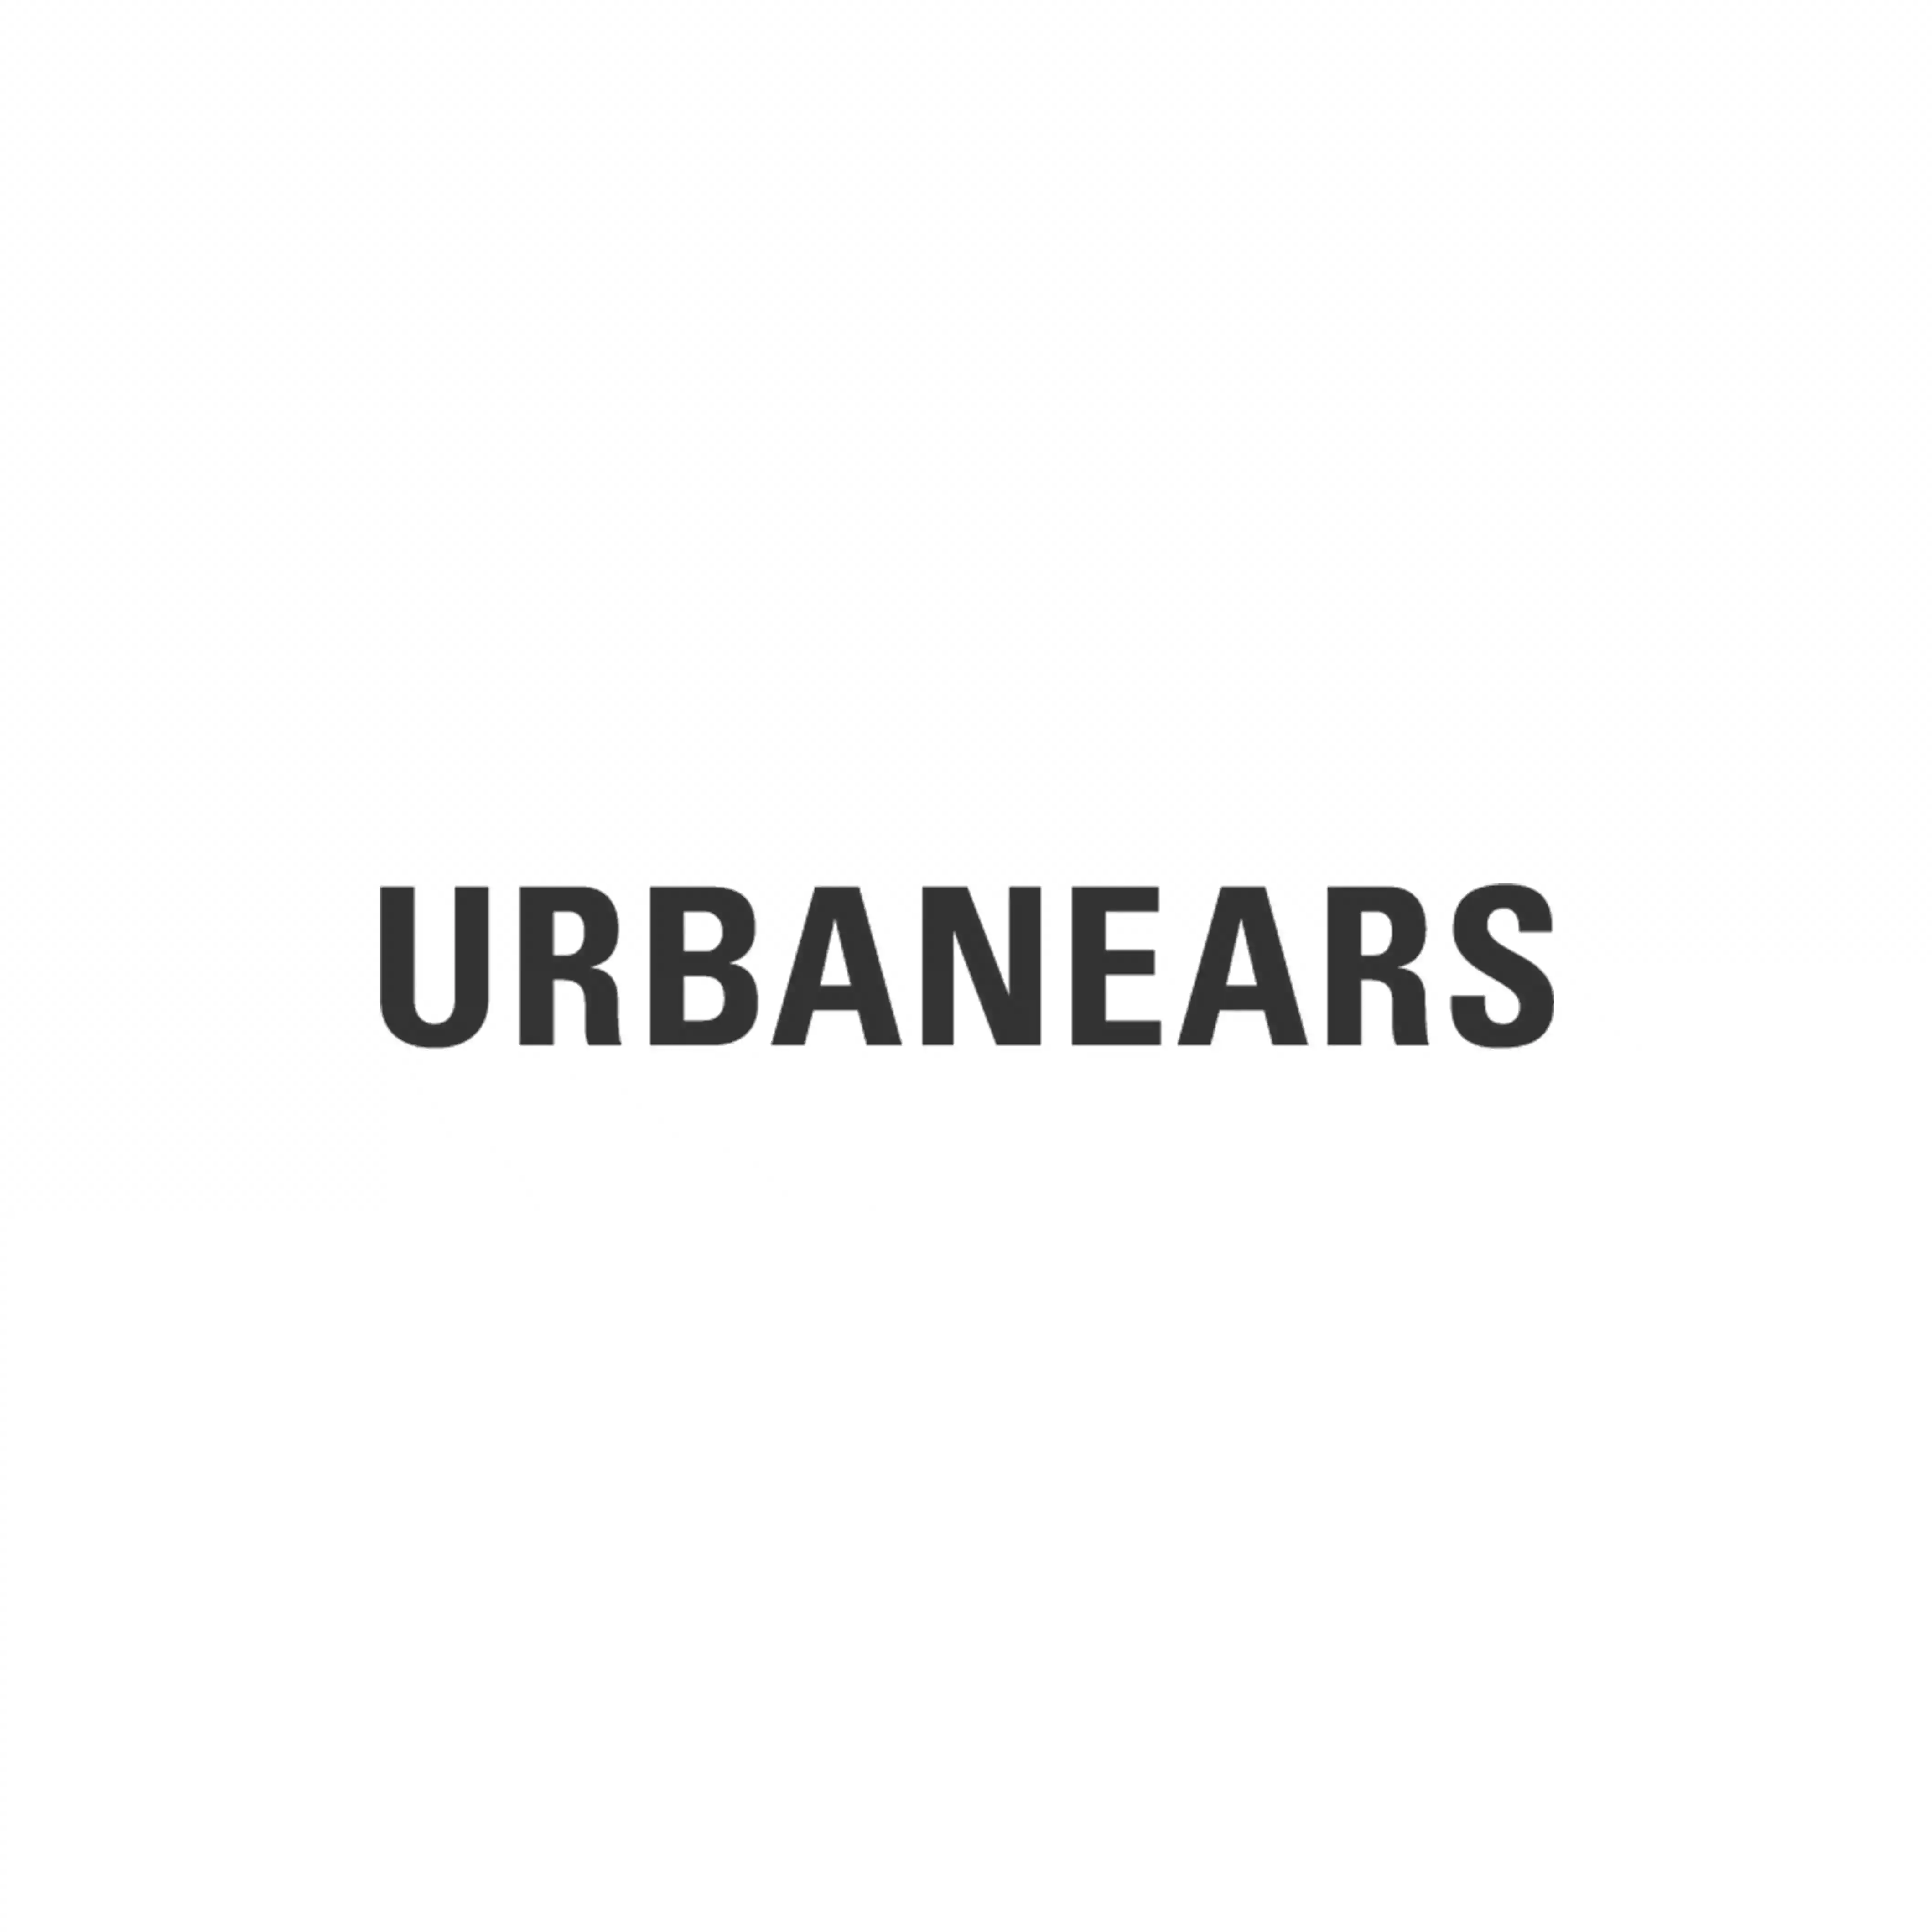 Urbanears promo codes